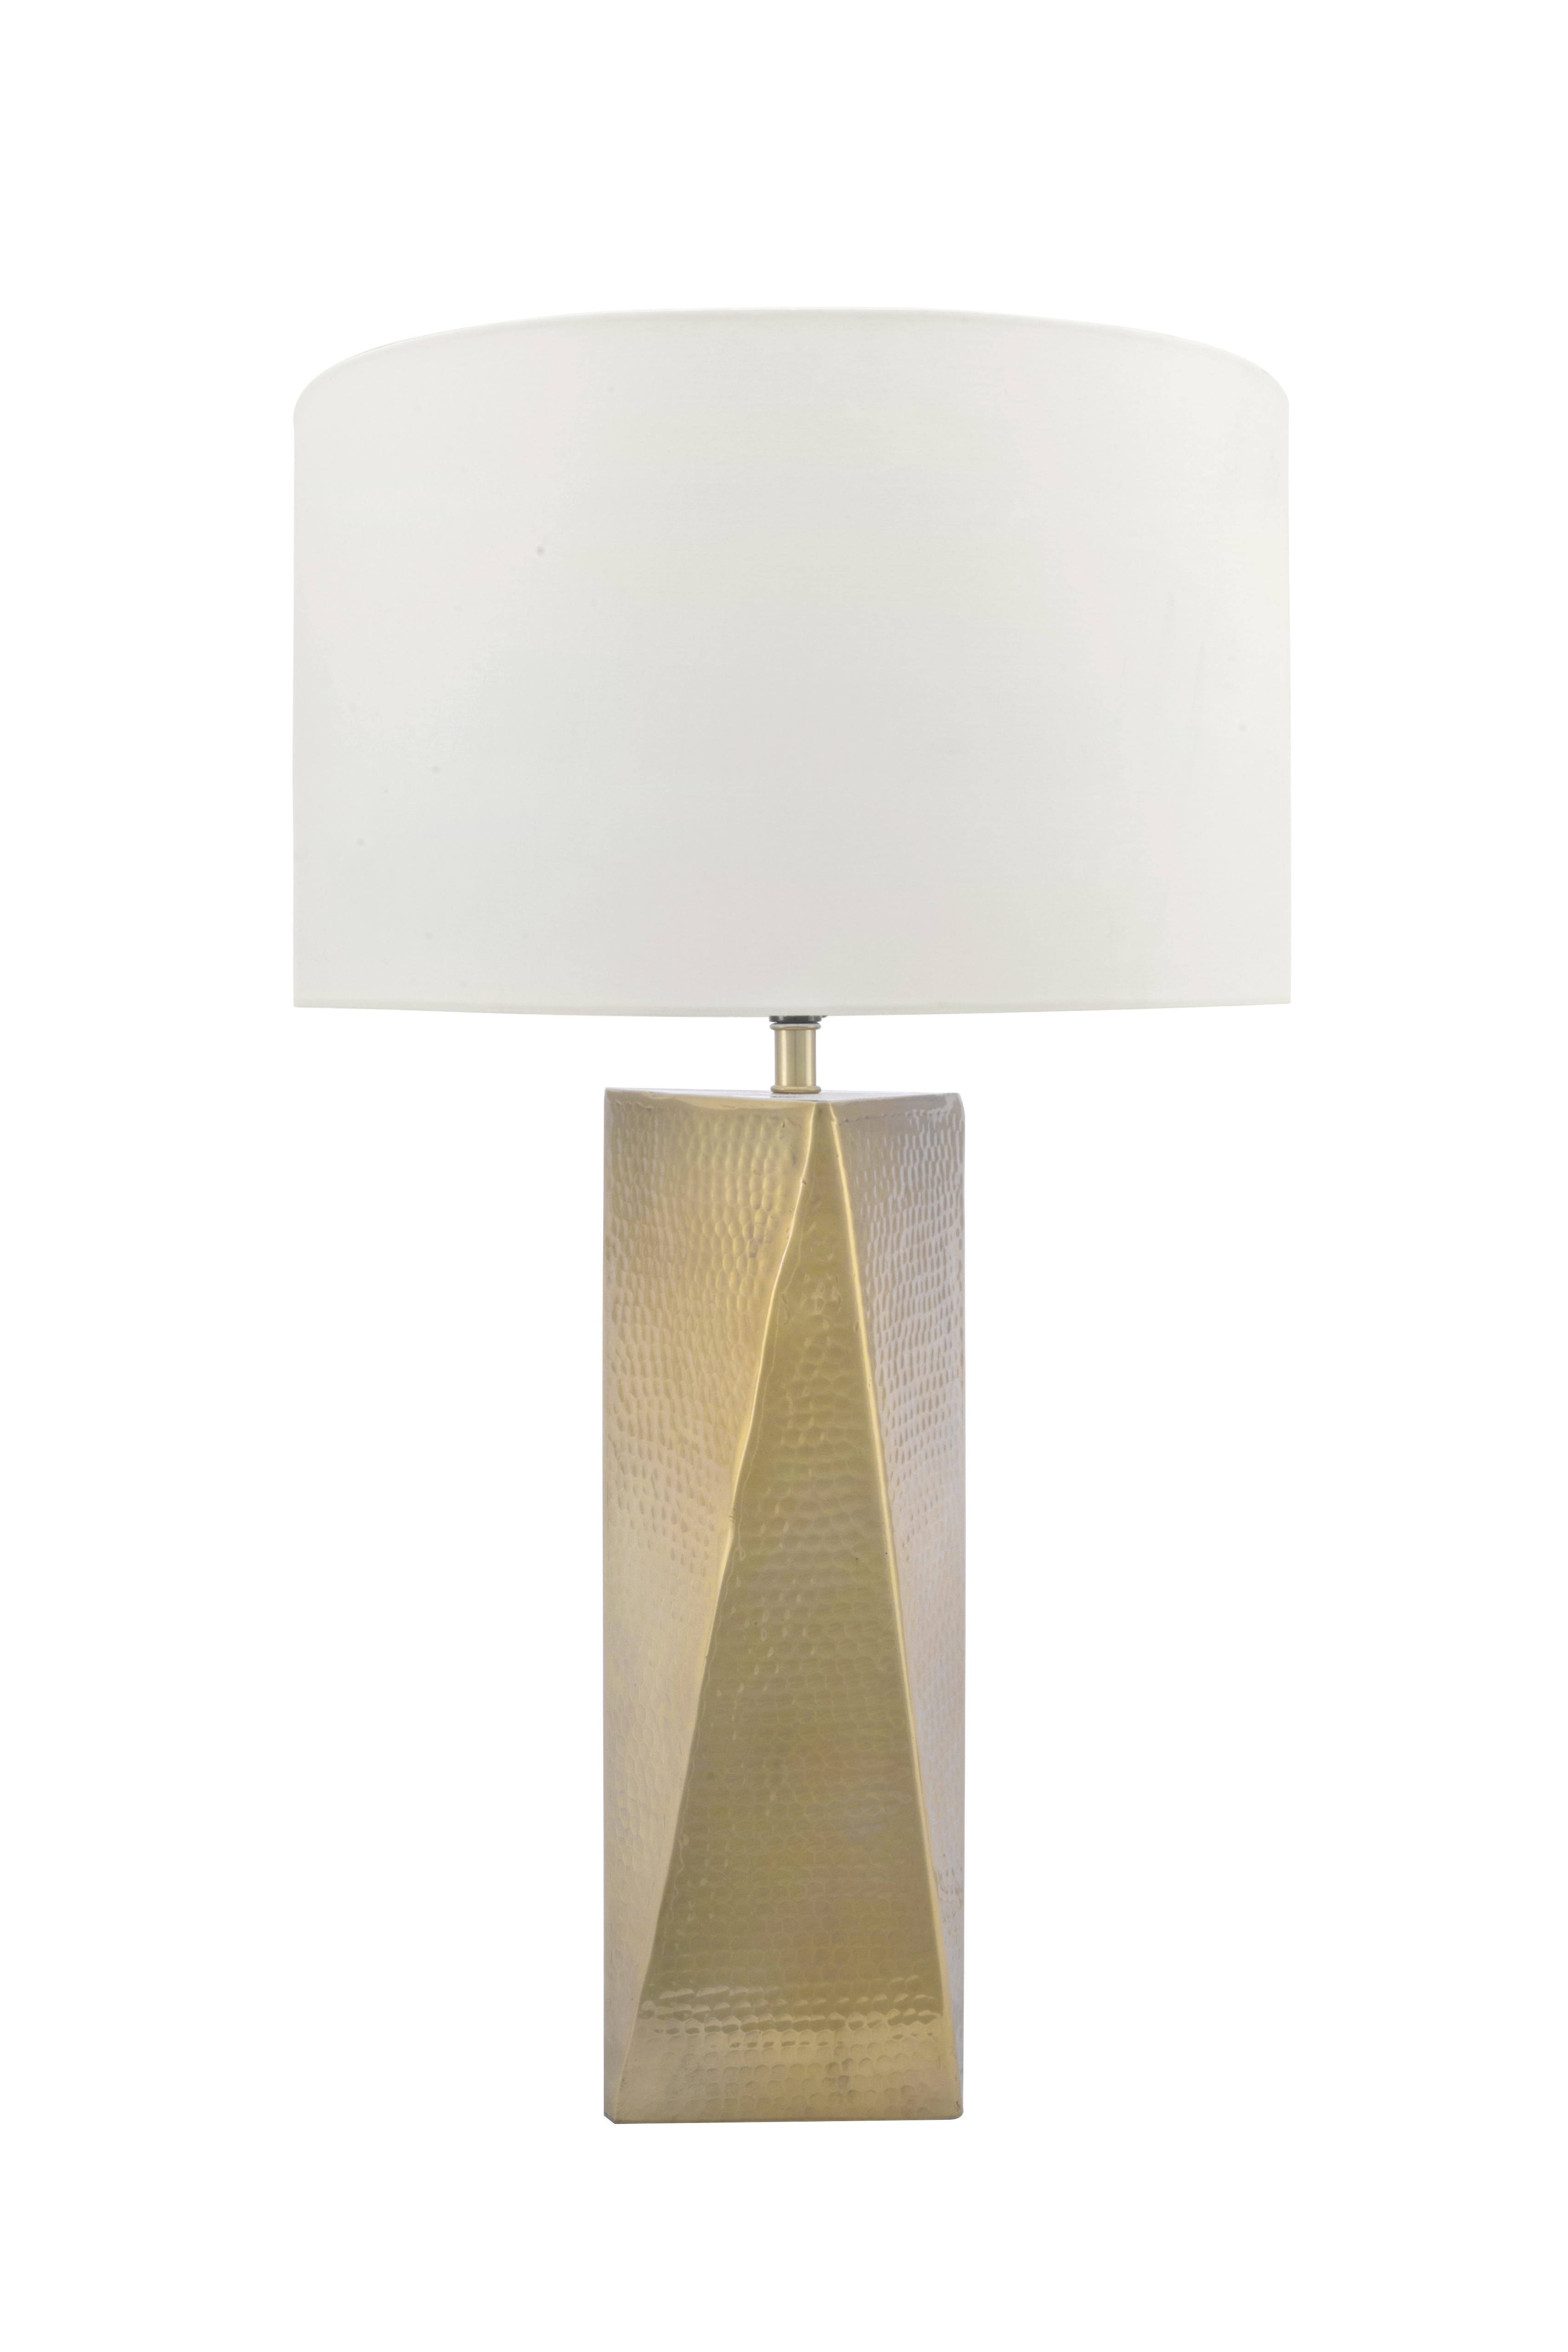 Essex 24" Metal Table Lamp - Image 1